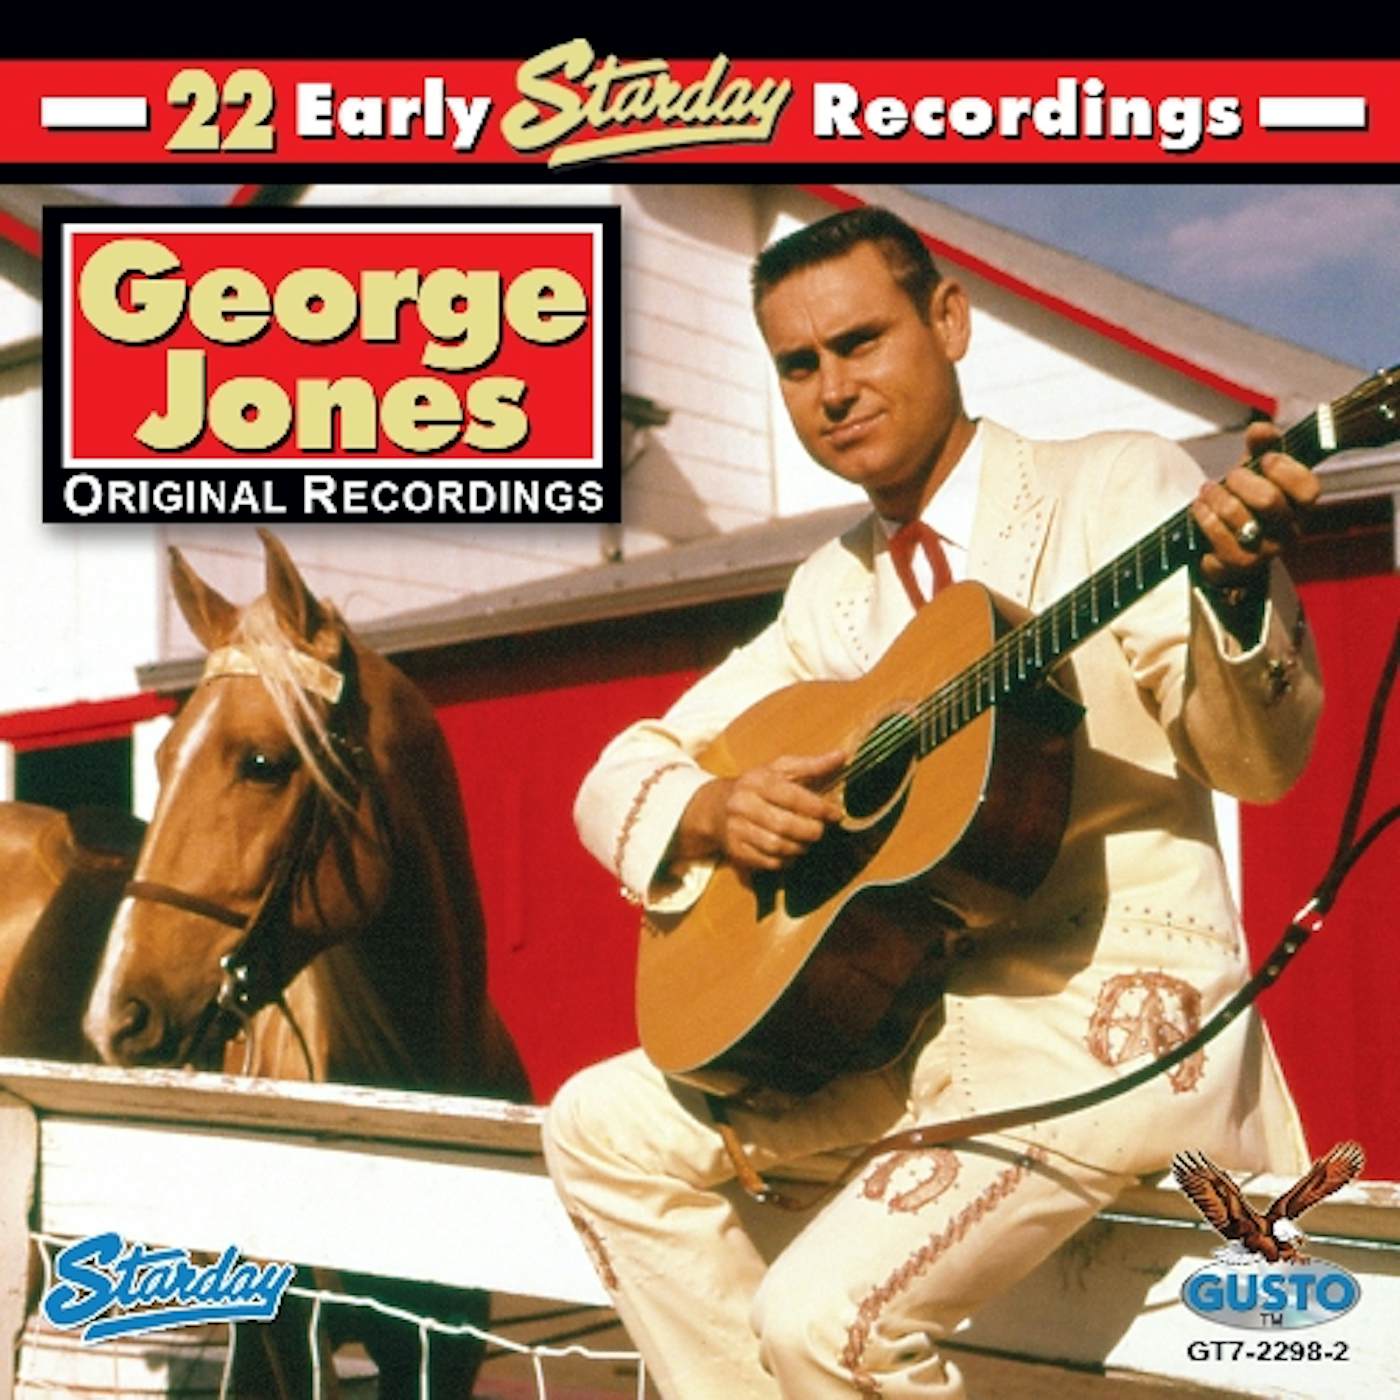 George Jones 22 EARLY STARDAY RECORDINGS CD